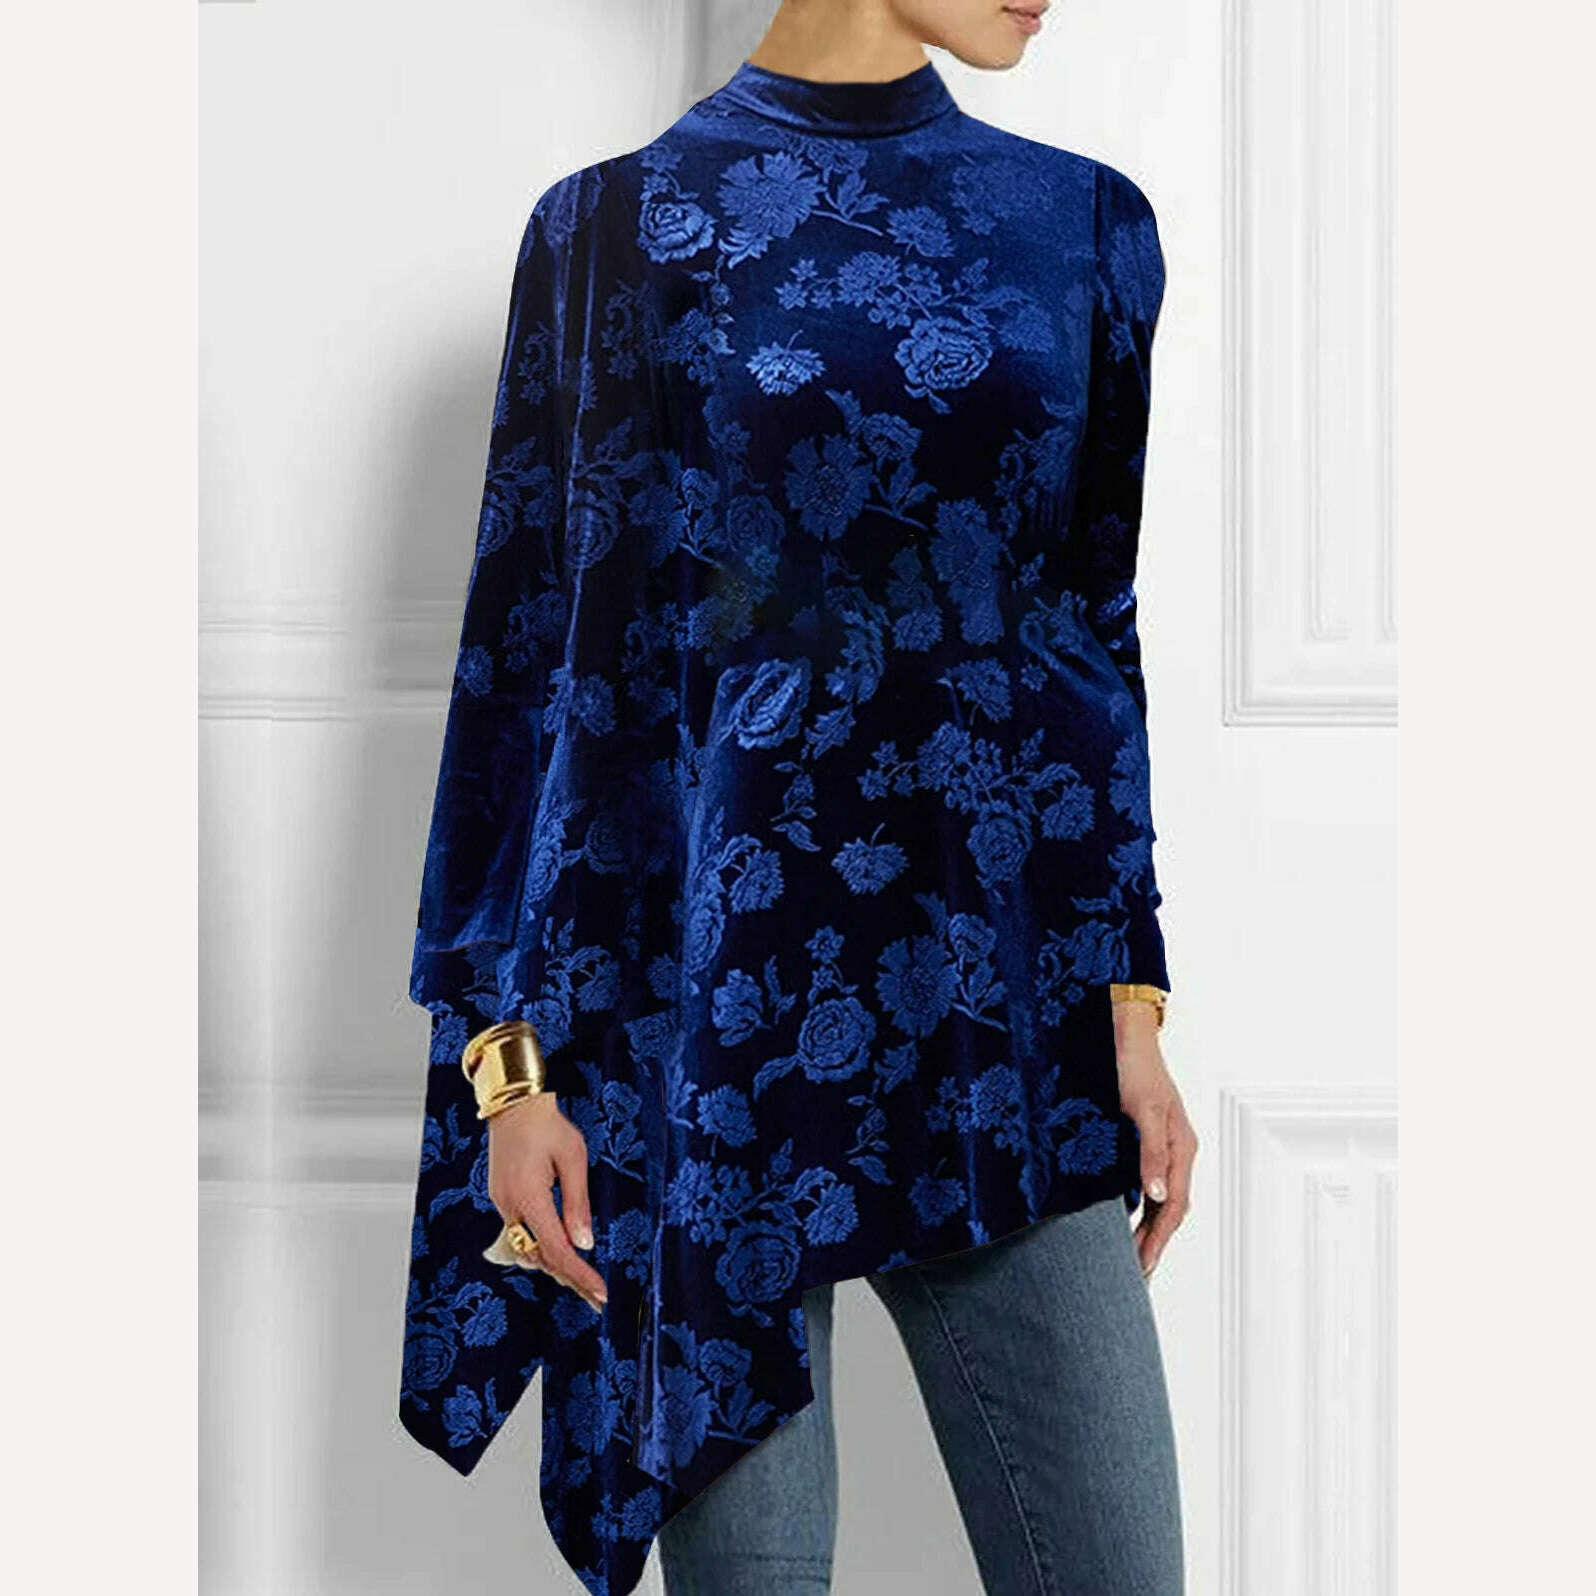 Women's Plus Size Irregular Hem Blouse Autumn Winter Fashion Retro Long Sleeve T-Shirt Turtleneck Casual Loose Asymmetrical Top, Blue / M / CHINA, KIMLUD Women's Clothes